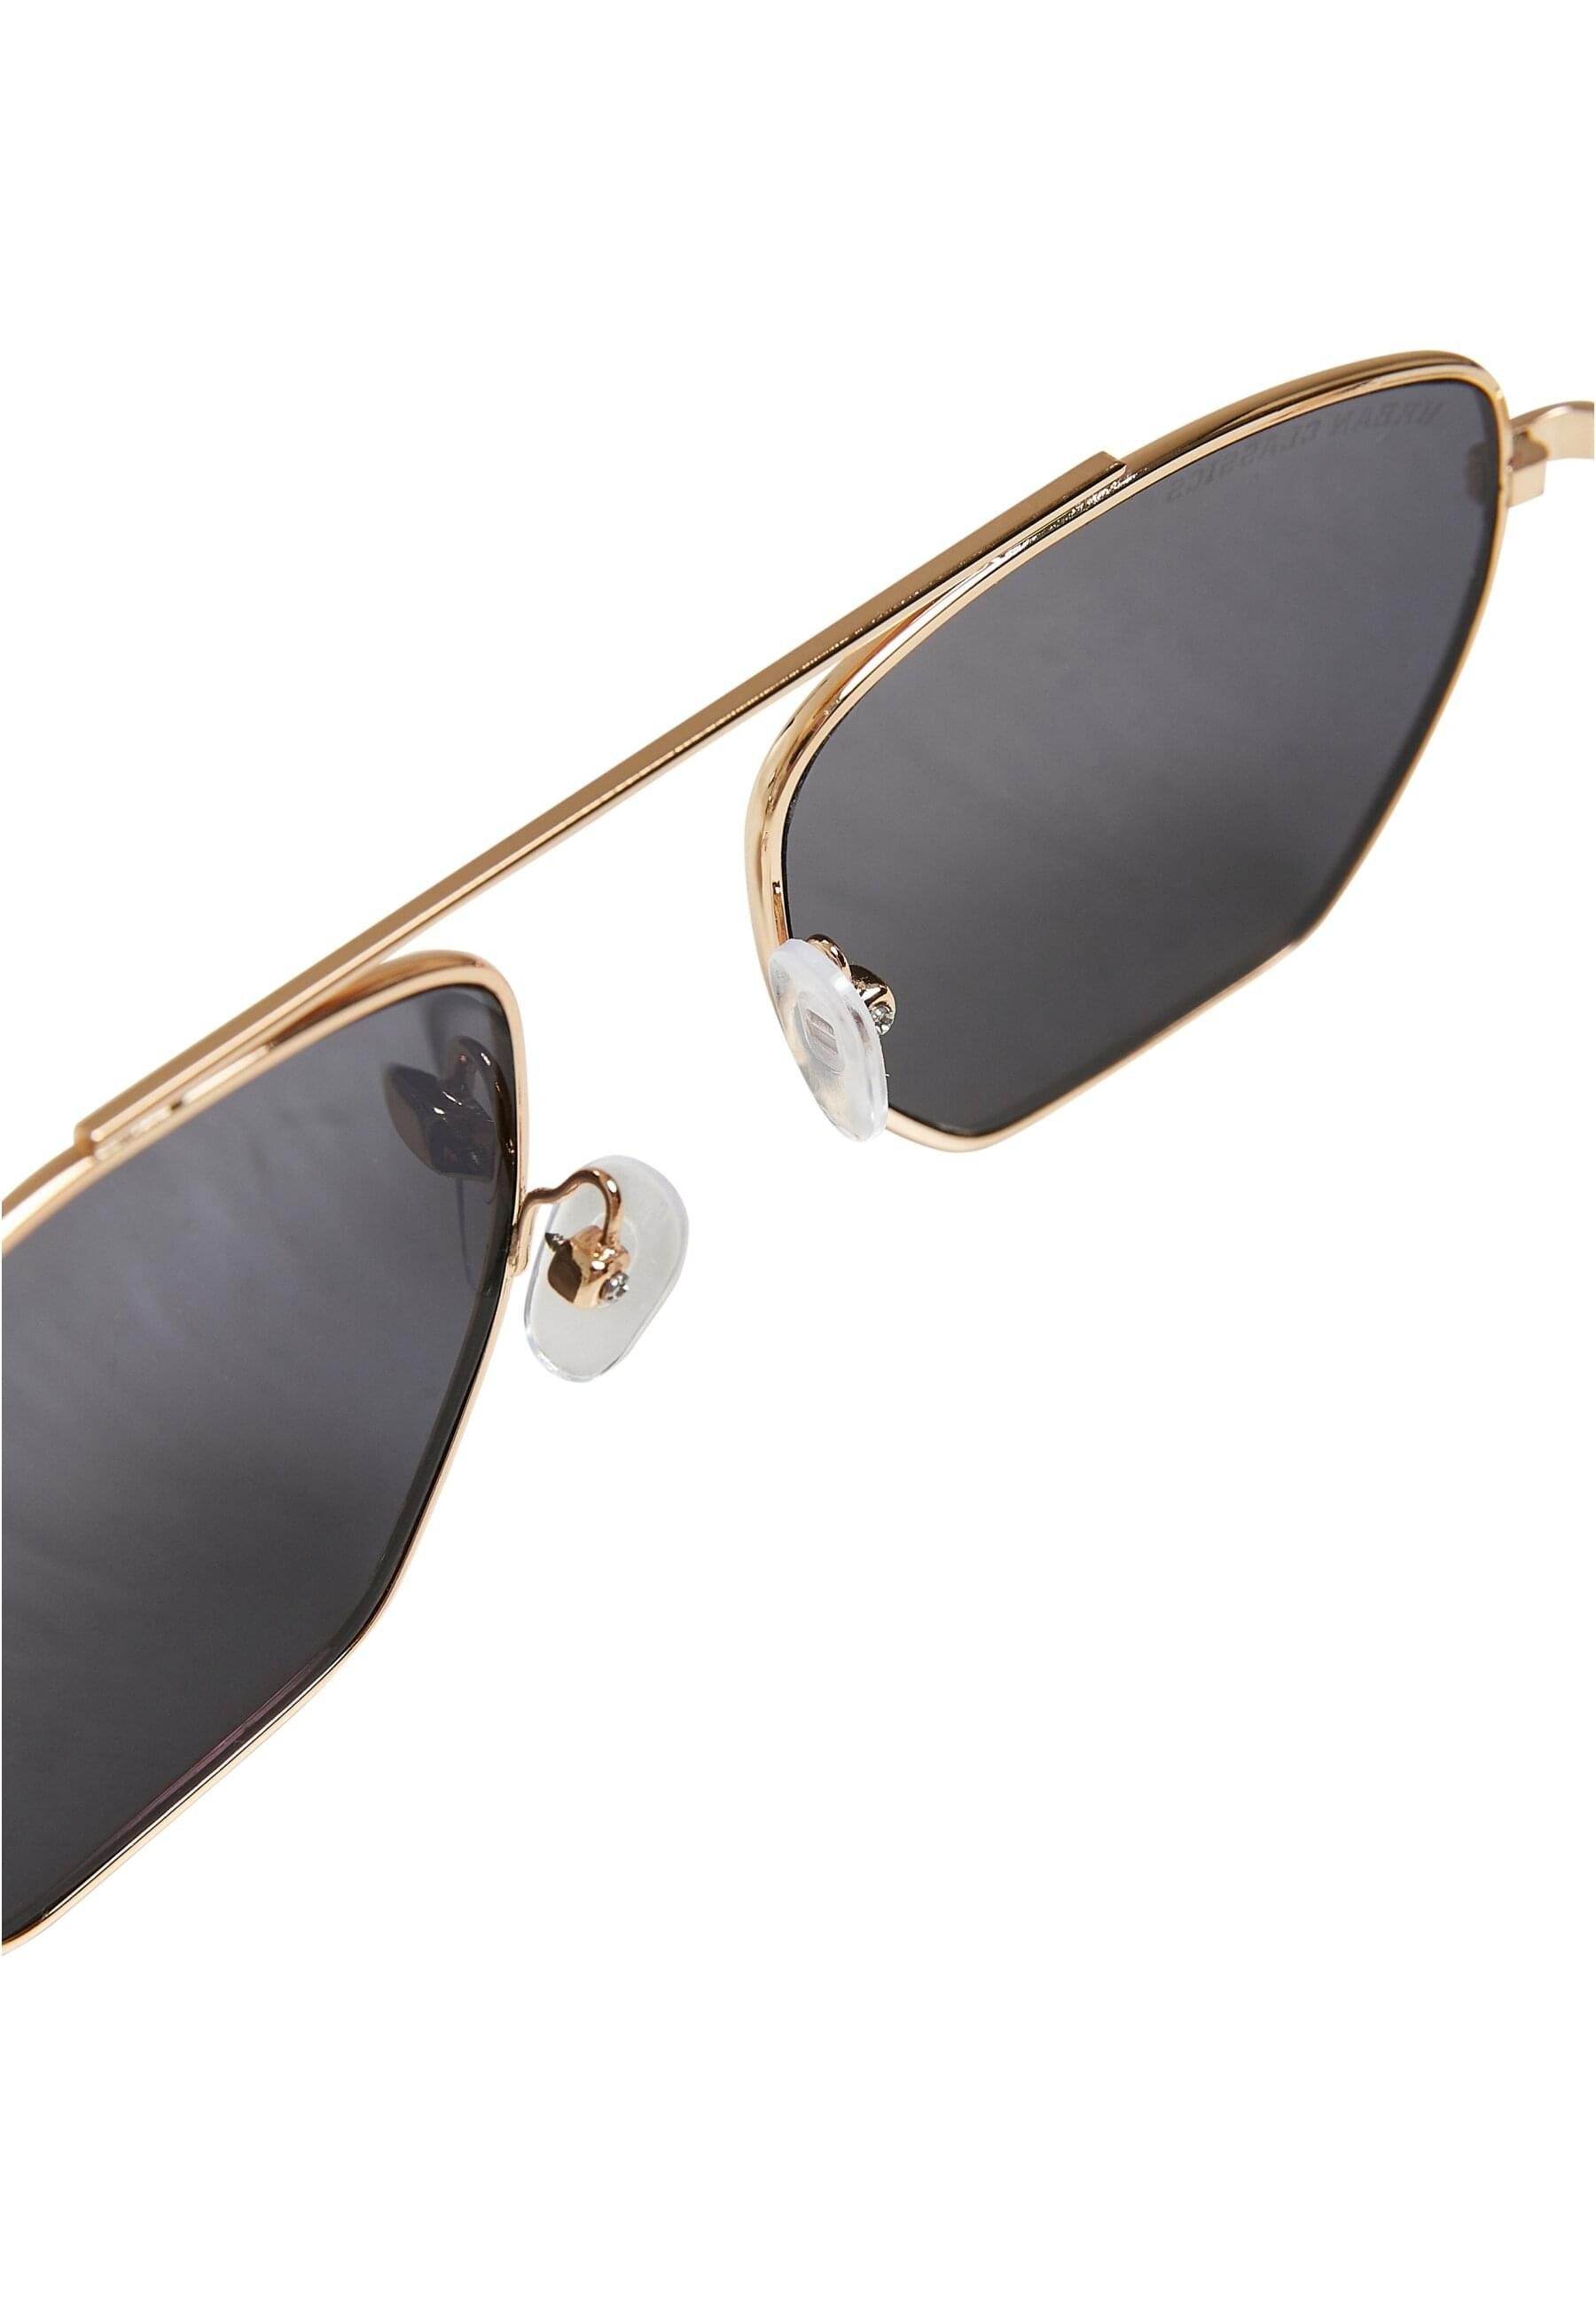 Denver black/gold Unisex CLASSICS URBAN Sunglasses Sonnenbrille